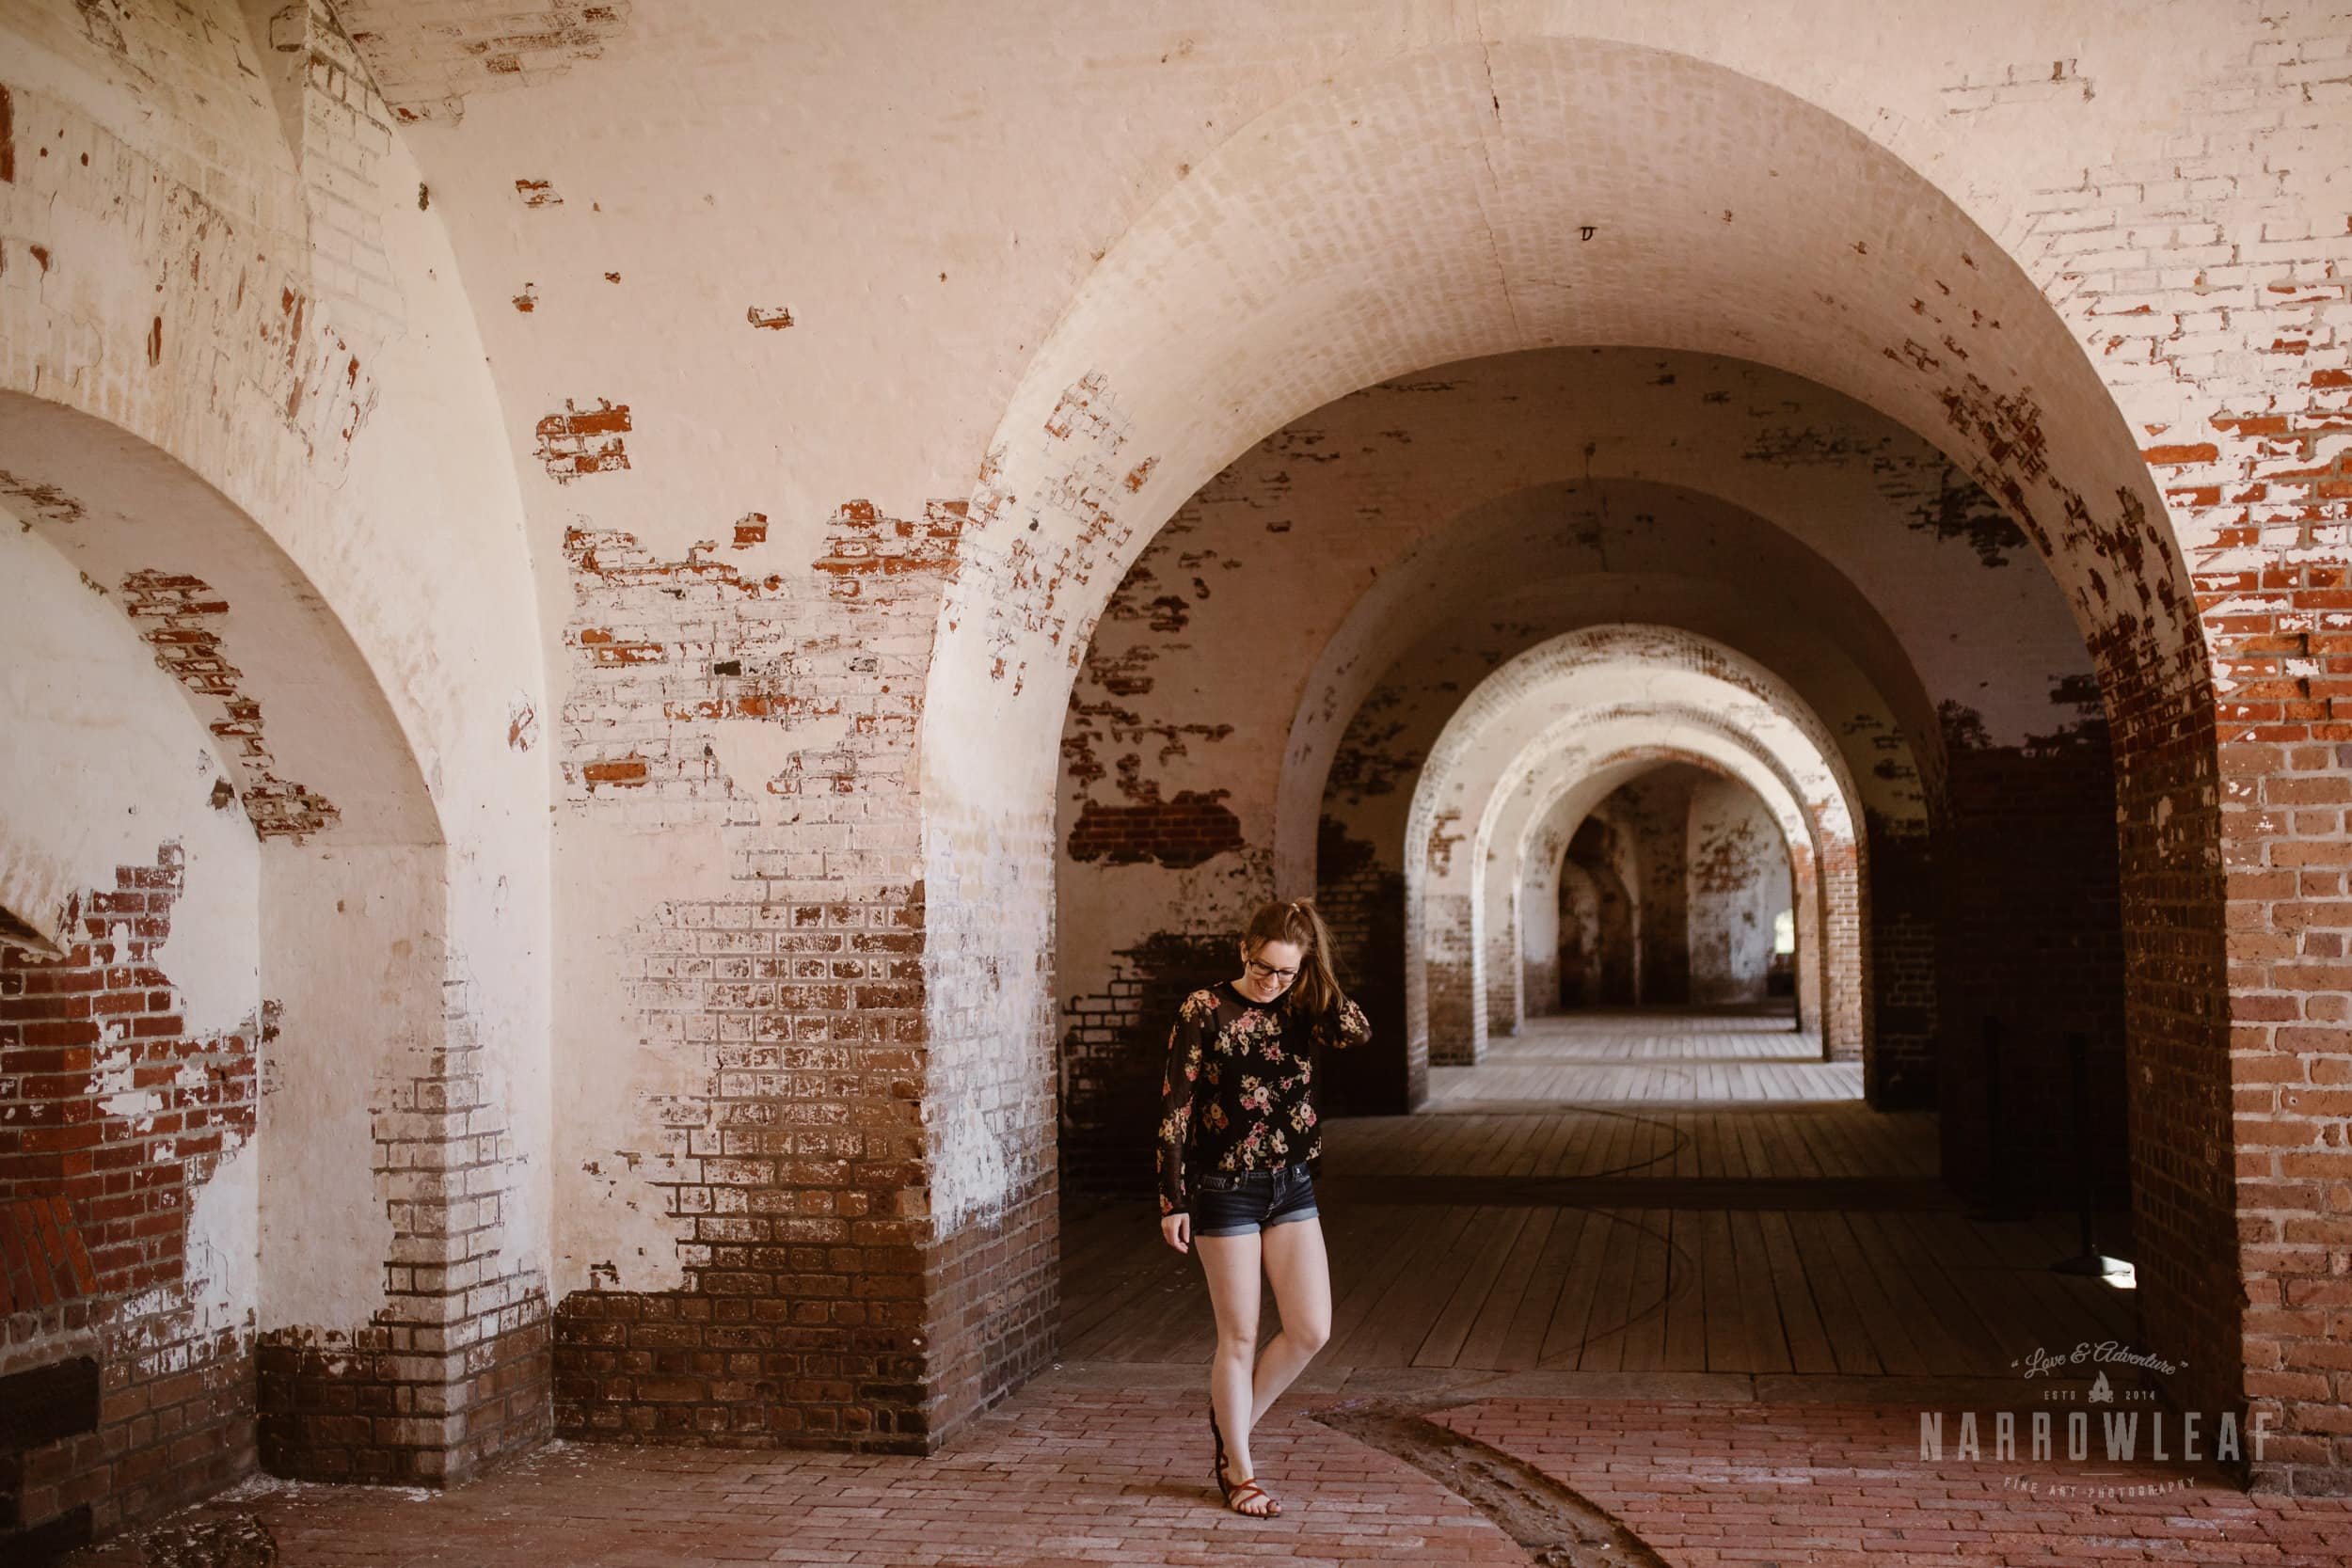 Fort-Pulaski-National-Monument-Narrowleaf_Love_and_Adventure_Photography-0727.jpg_1.jpg